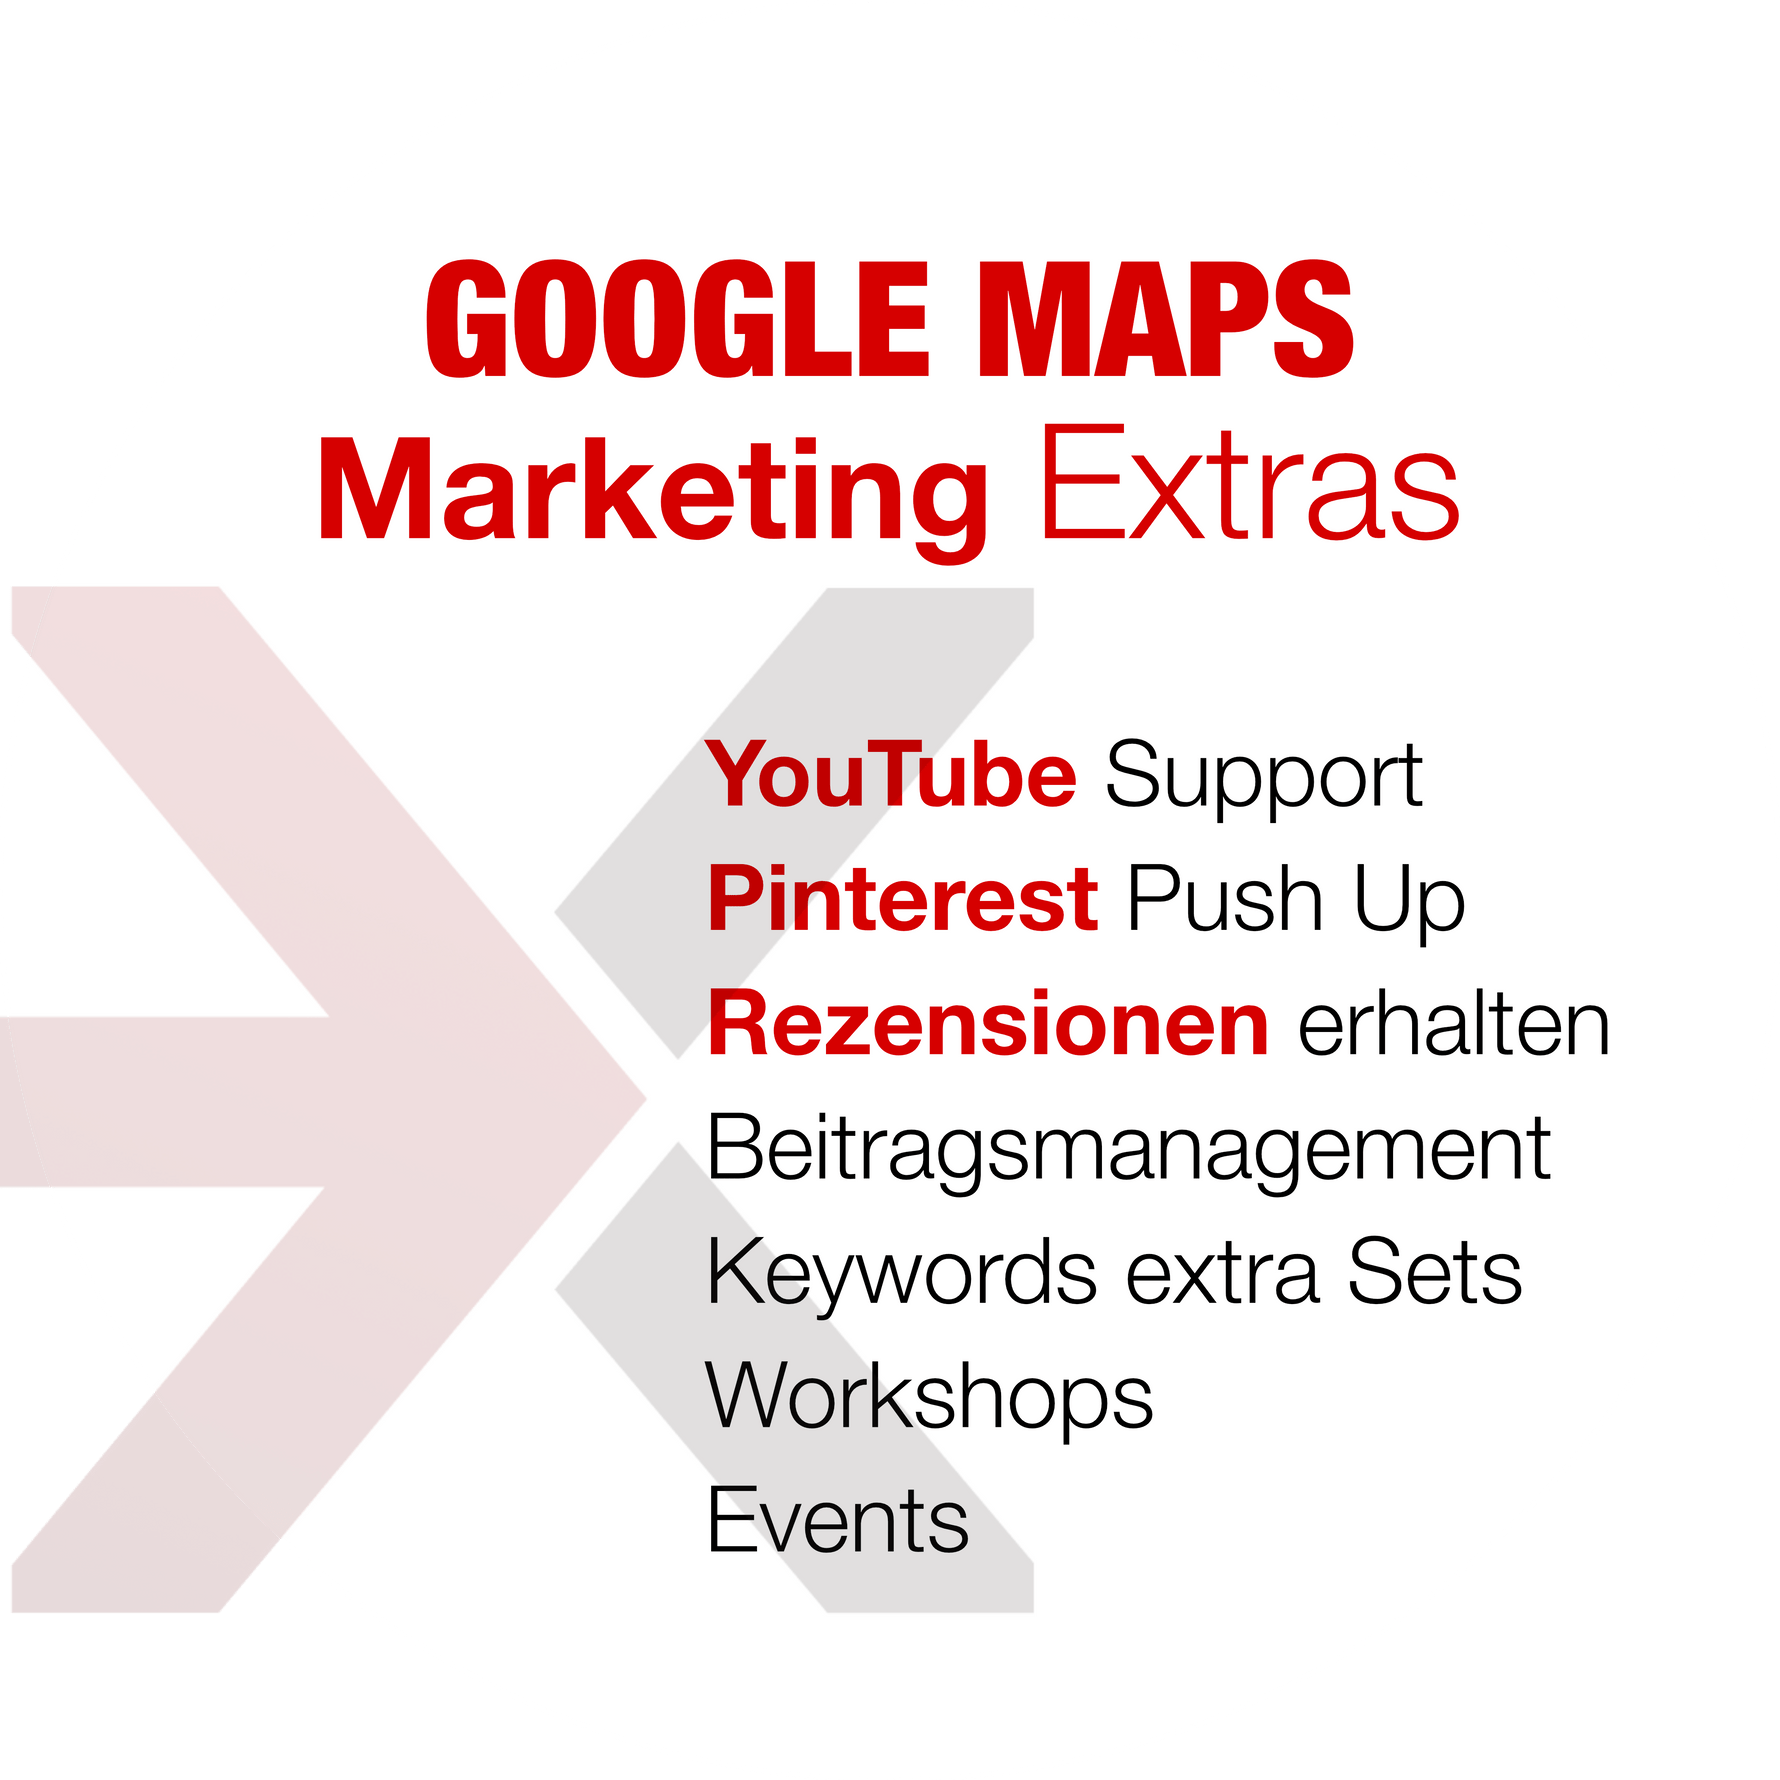 Google Maps Marketing Extras YouTube, Pinterest, Bewertungen, Workshops 